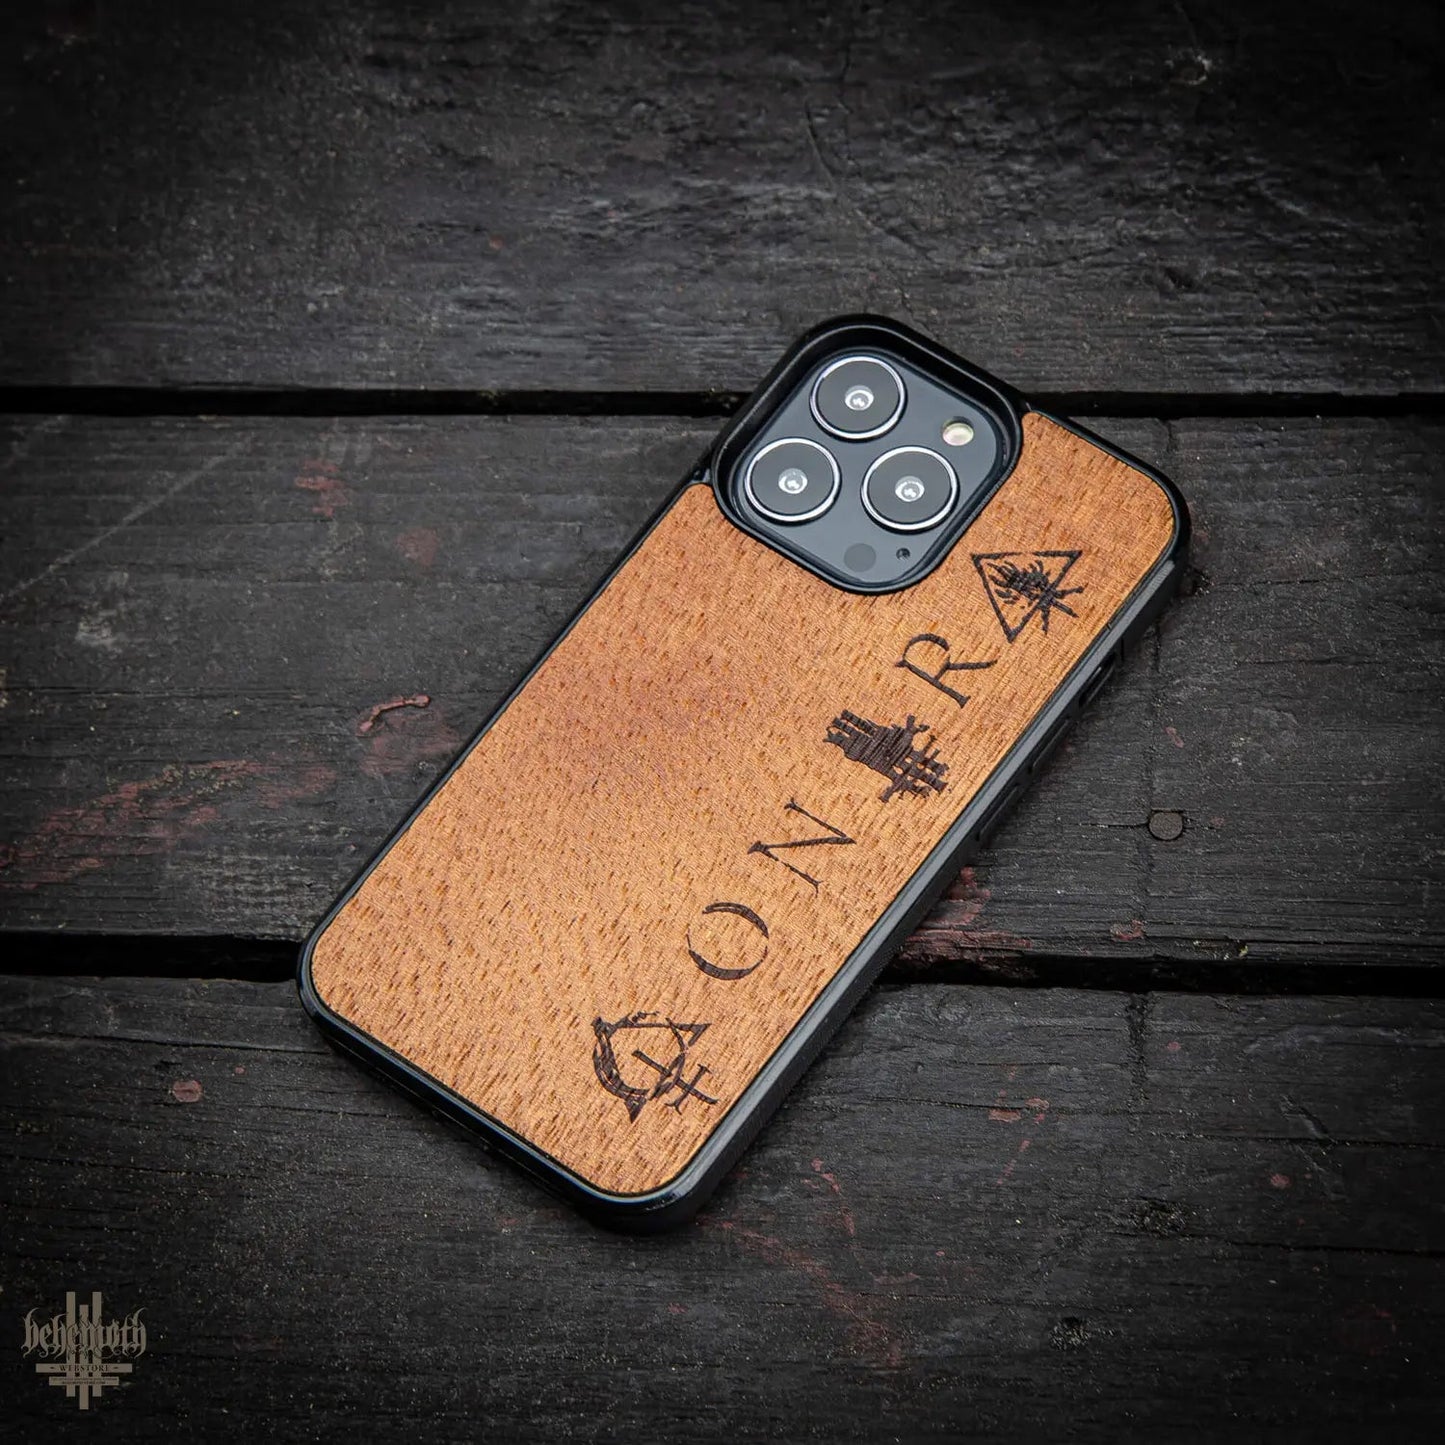 iPhone 13 Pro case with wood finishing and Behemoth 'CONTRA' logo